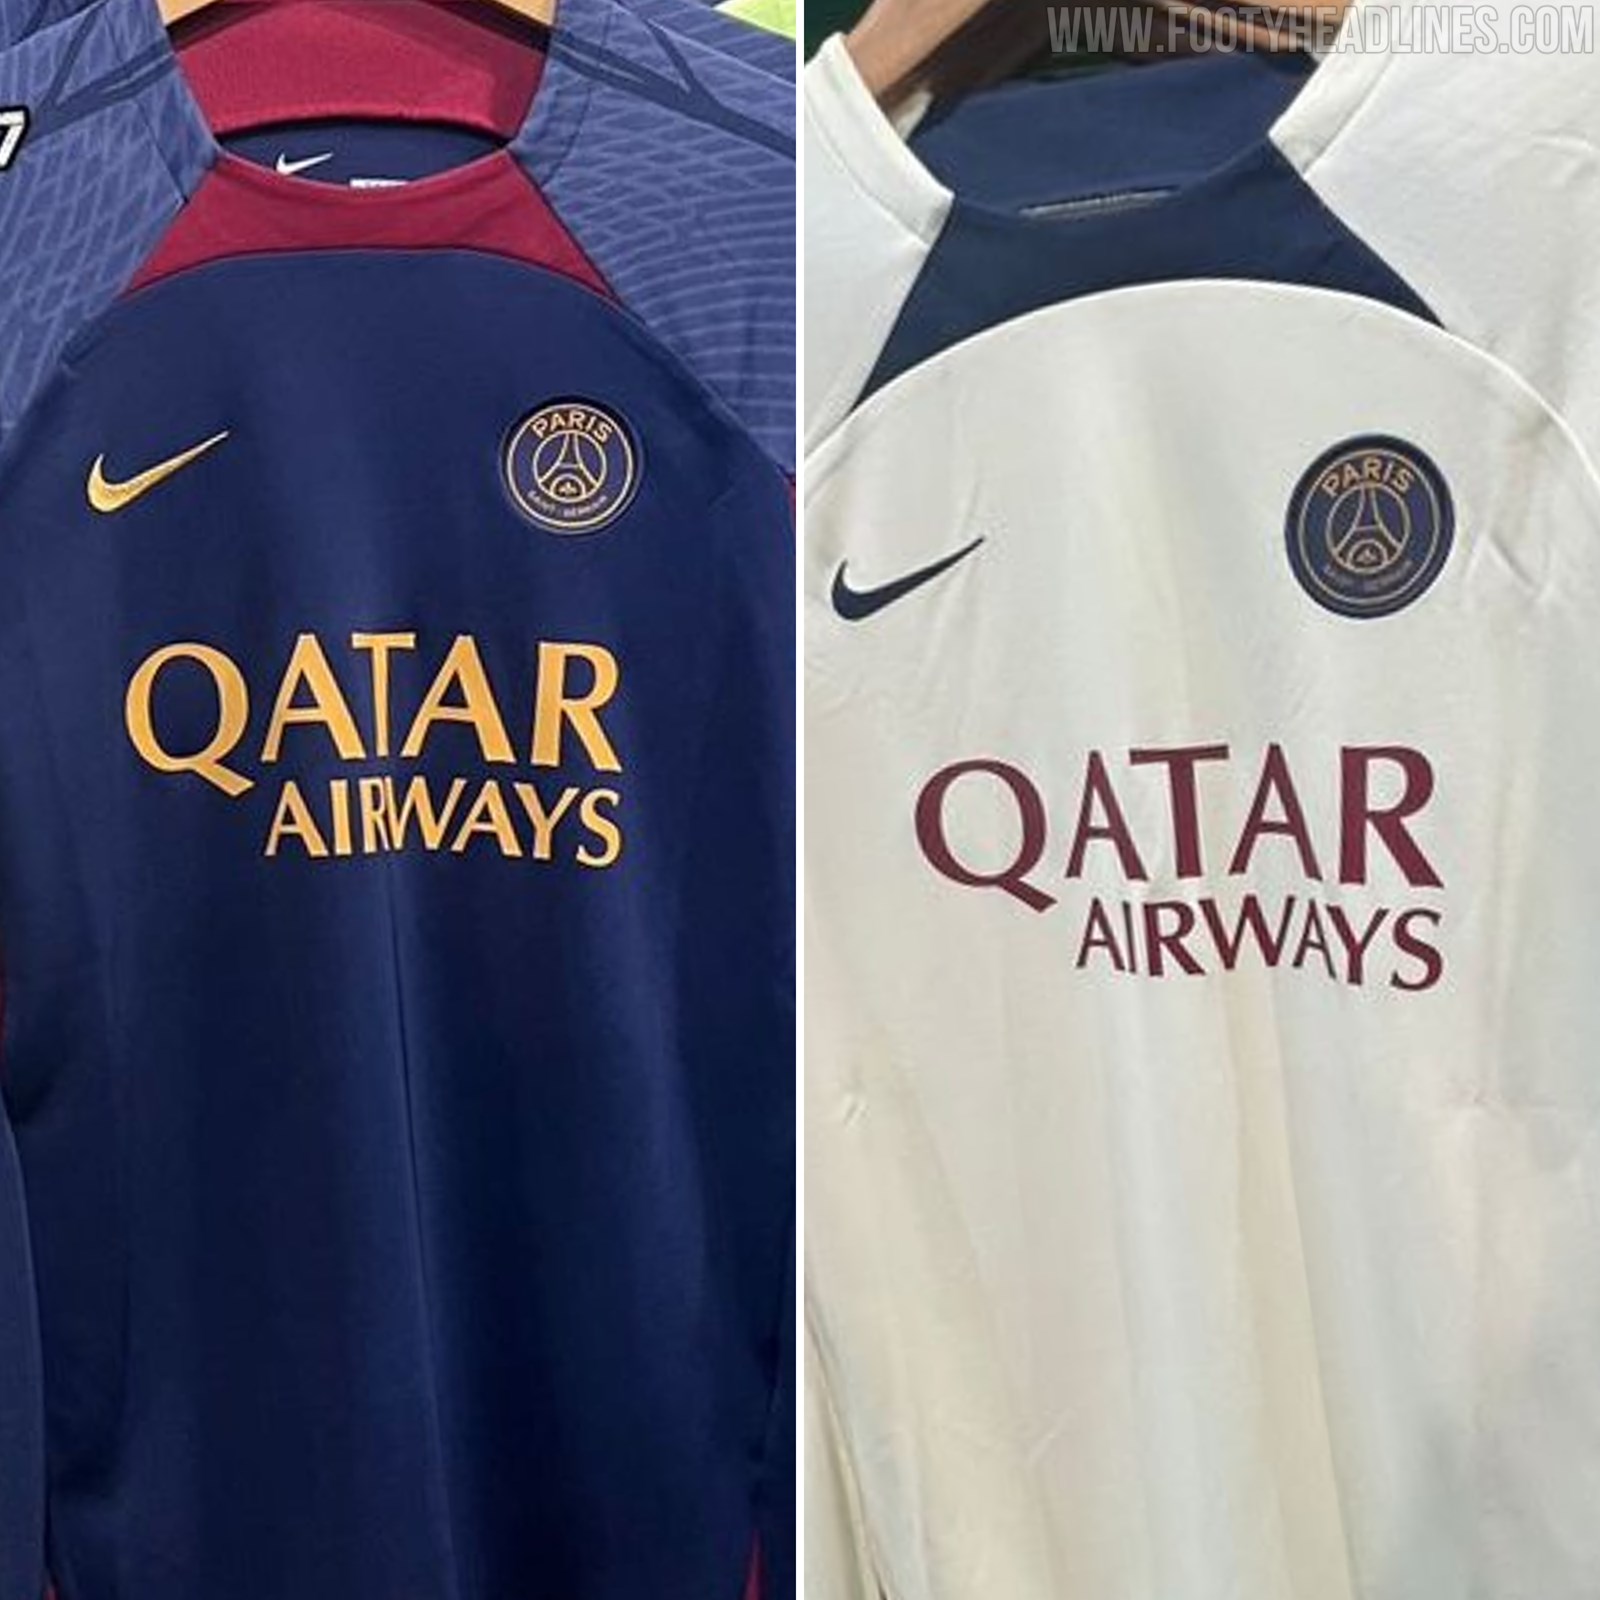 New Paris Saint Germain Football Kits, 23/24 Shirts